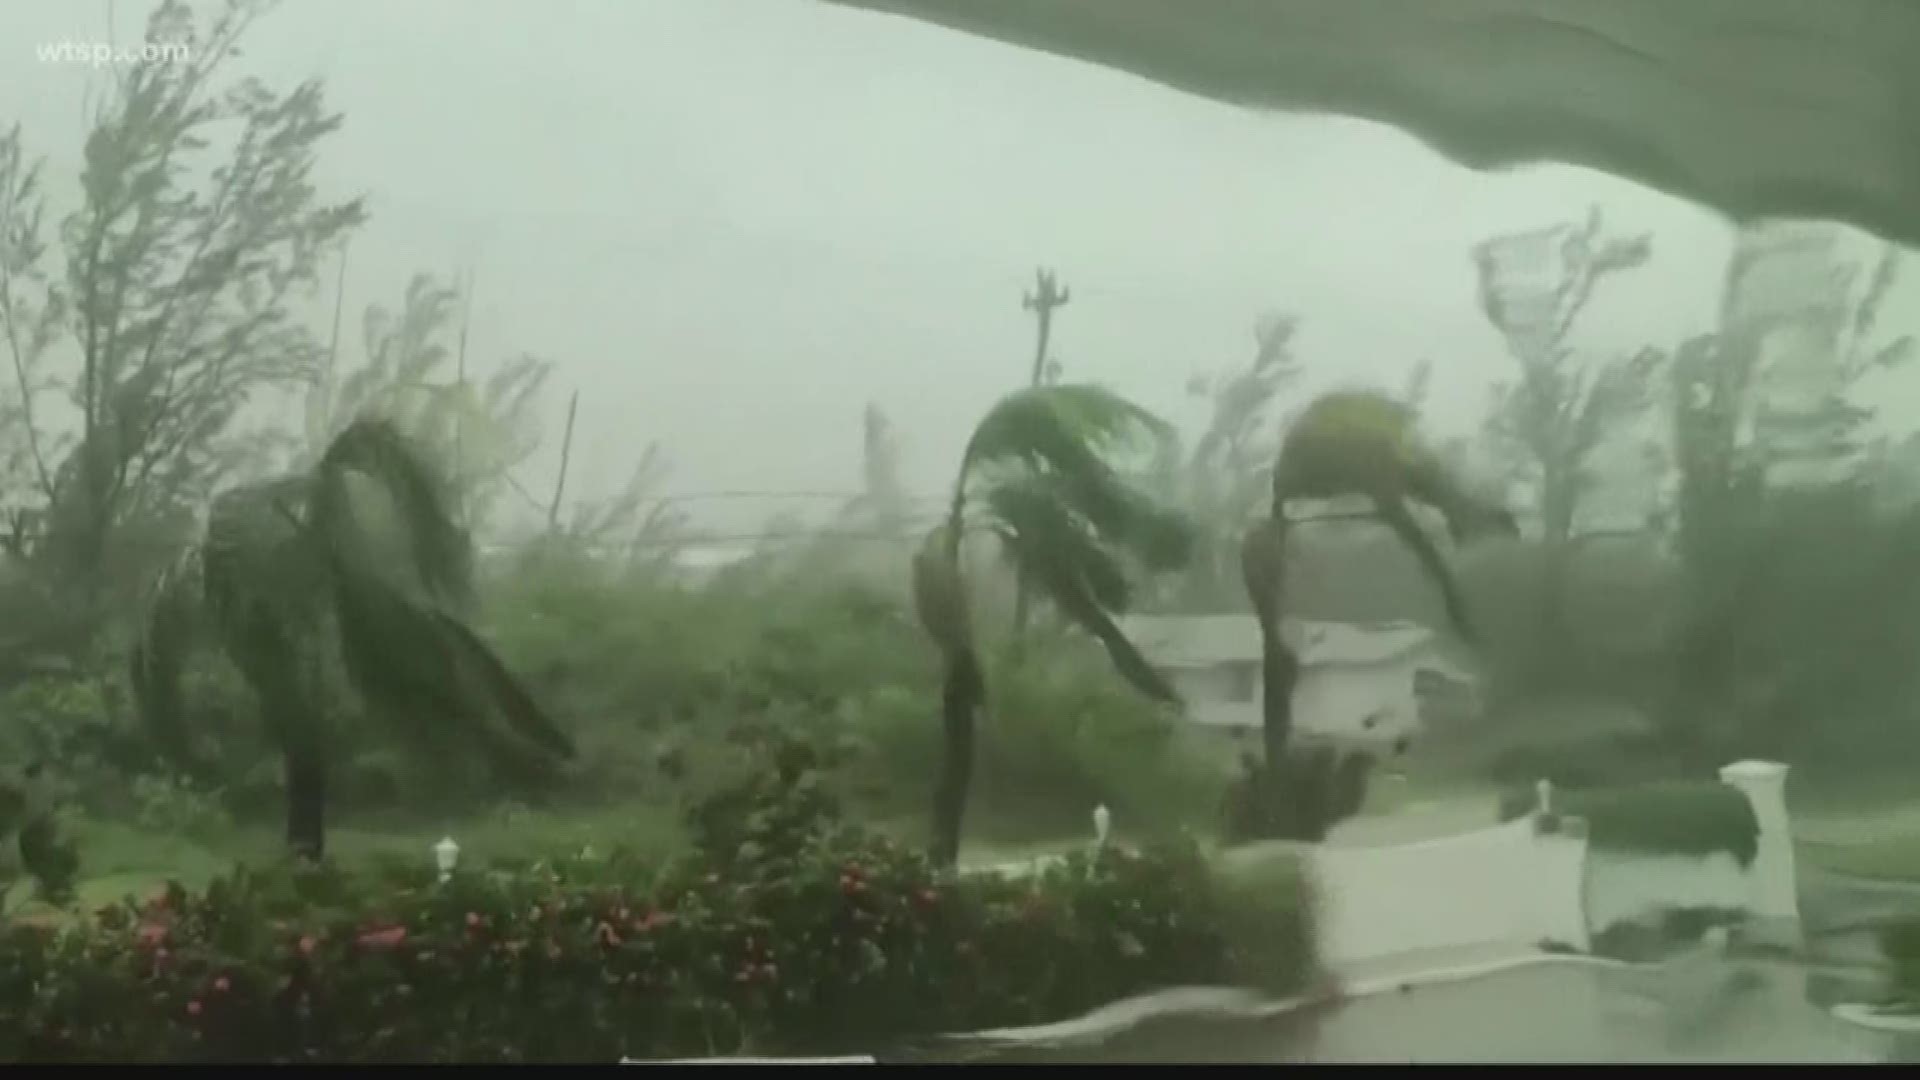 Mandatory evacuations are underway in the Carolinas as Hurricane Dorian moves up the East Coast.